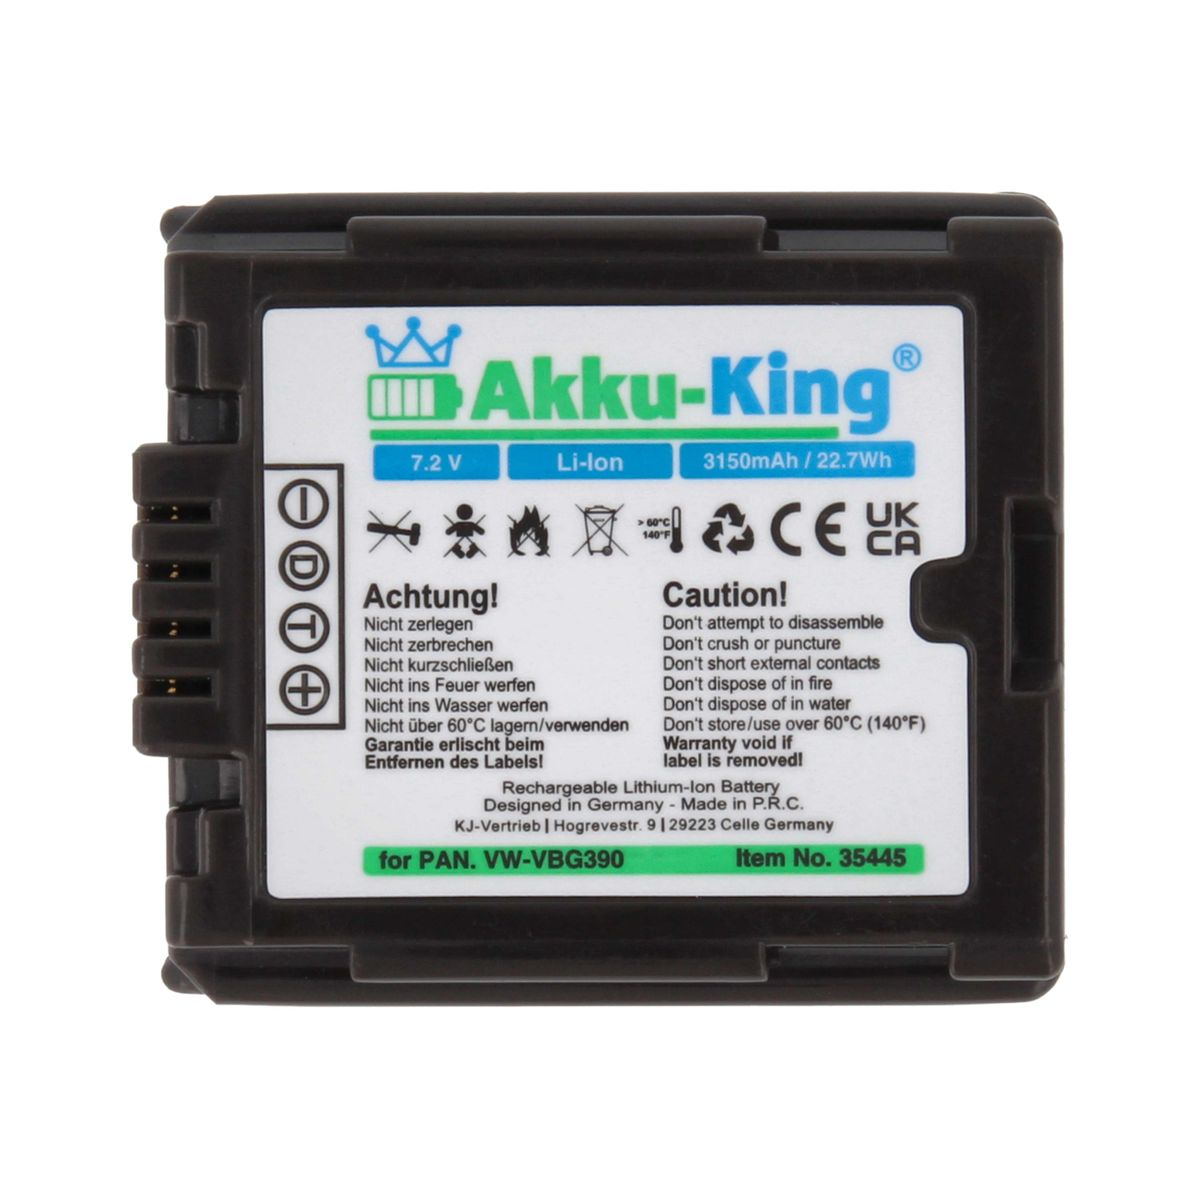 AKKU-KING Akku Kamera-Akku, VW-VBG390PP Panasonic kompatibel 3150mAh Li-Ion Volt, 7.4 mit